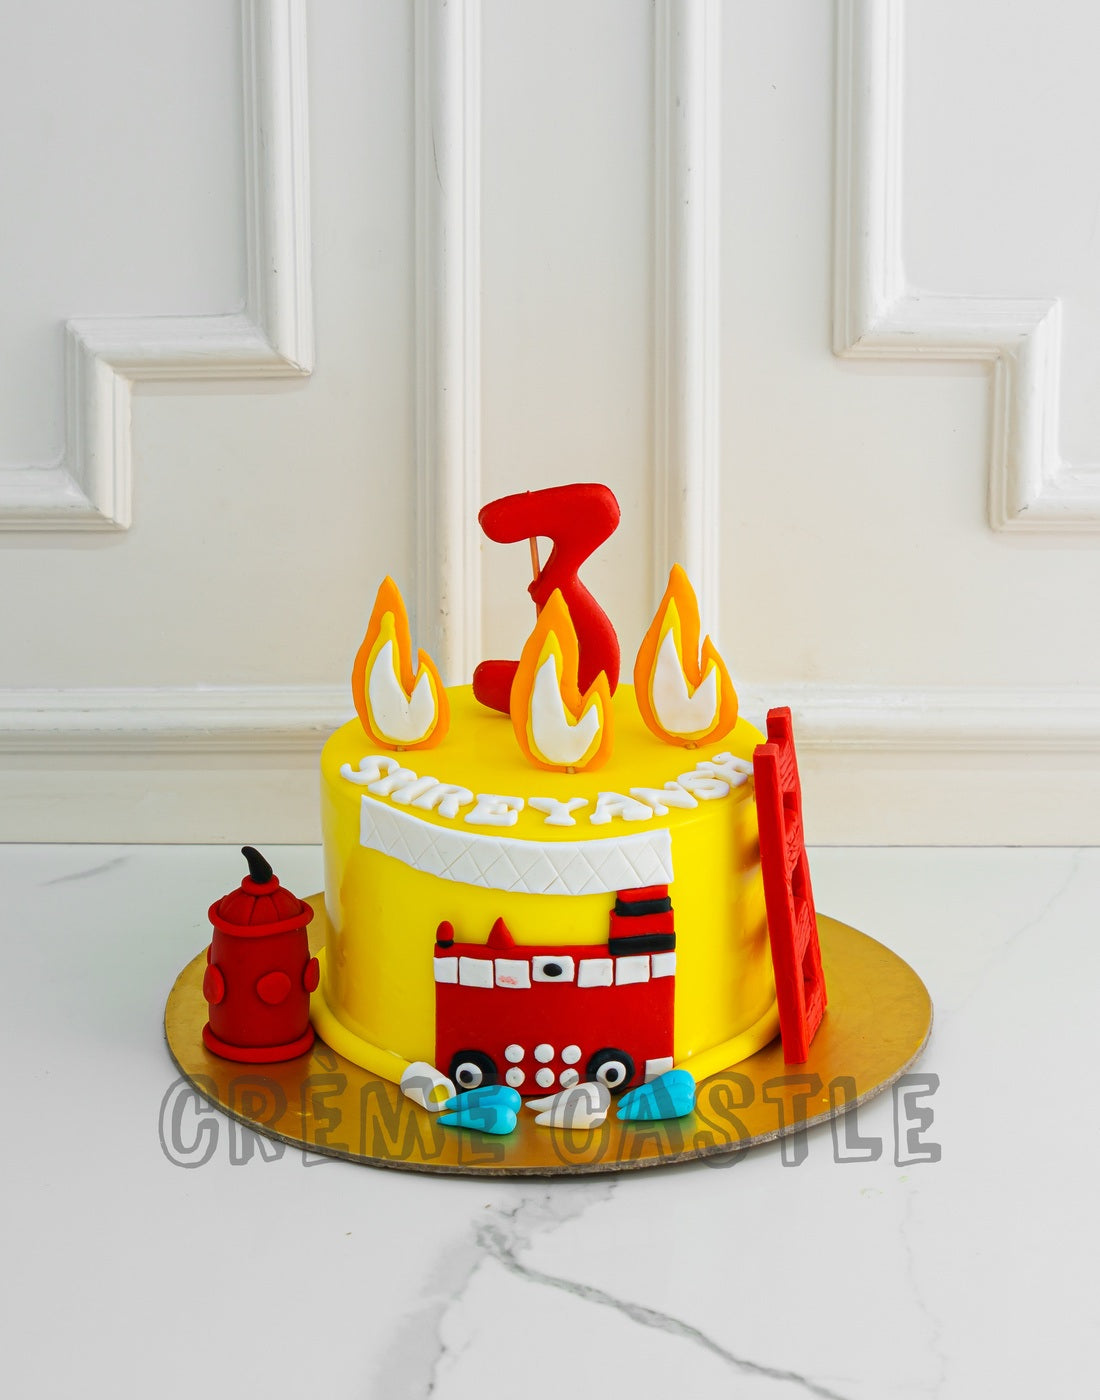 Sandro's Fire Truck Fireman Cake, A Customize Fireman cake